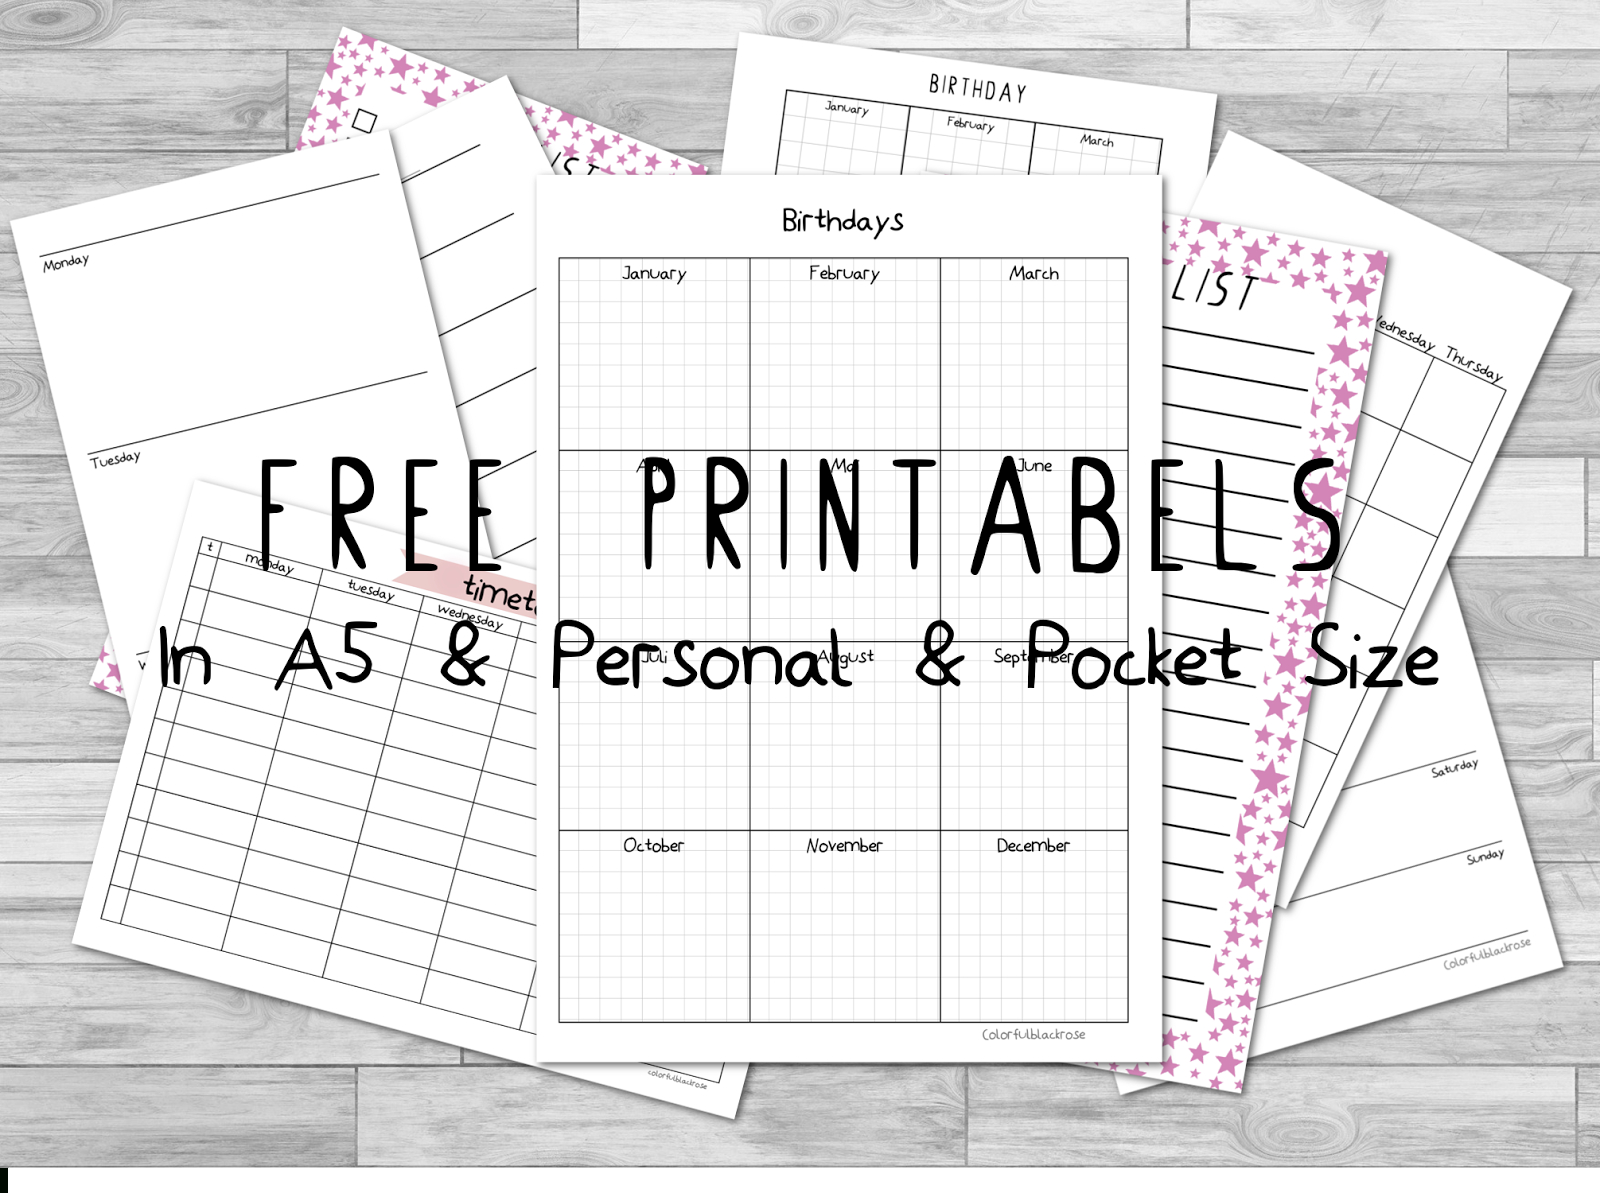 Filofax | Free Printables | Colorfulblackrose